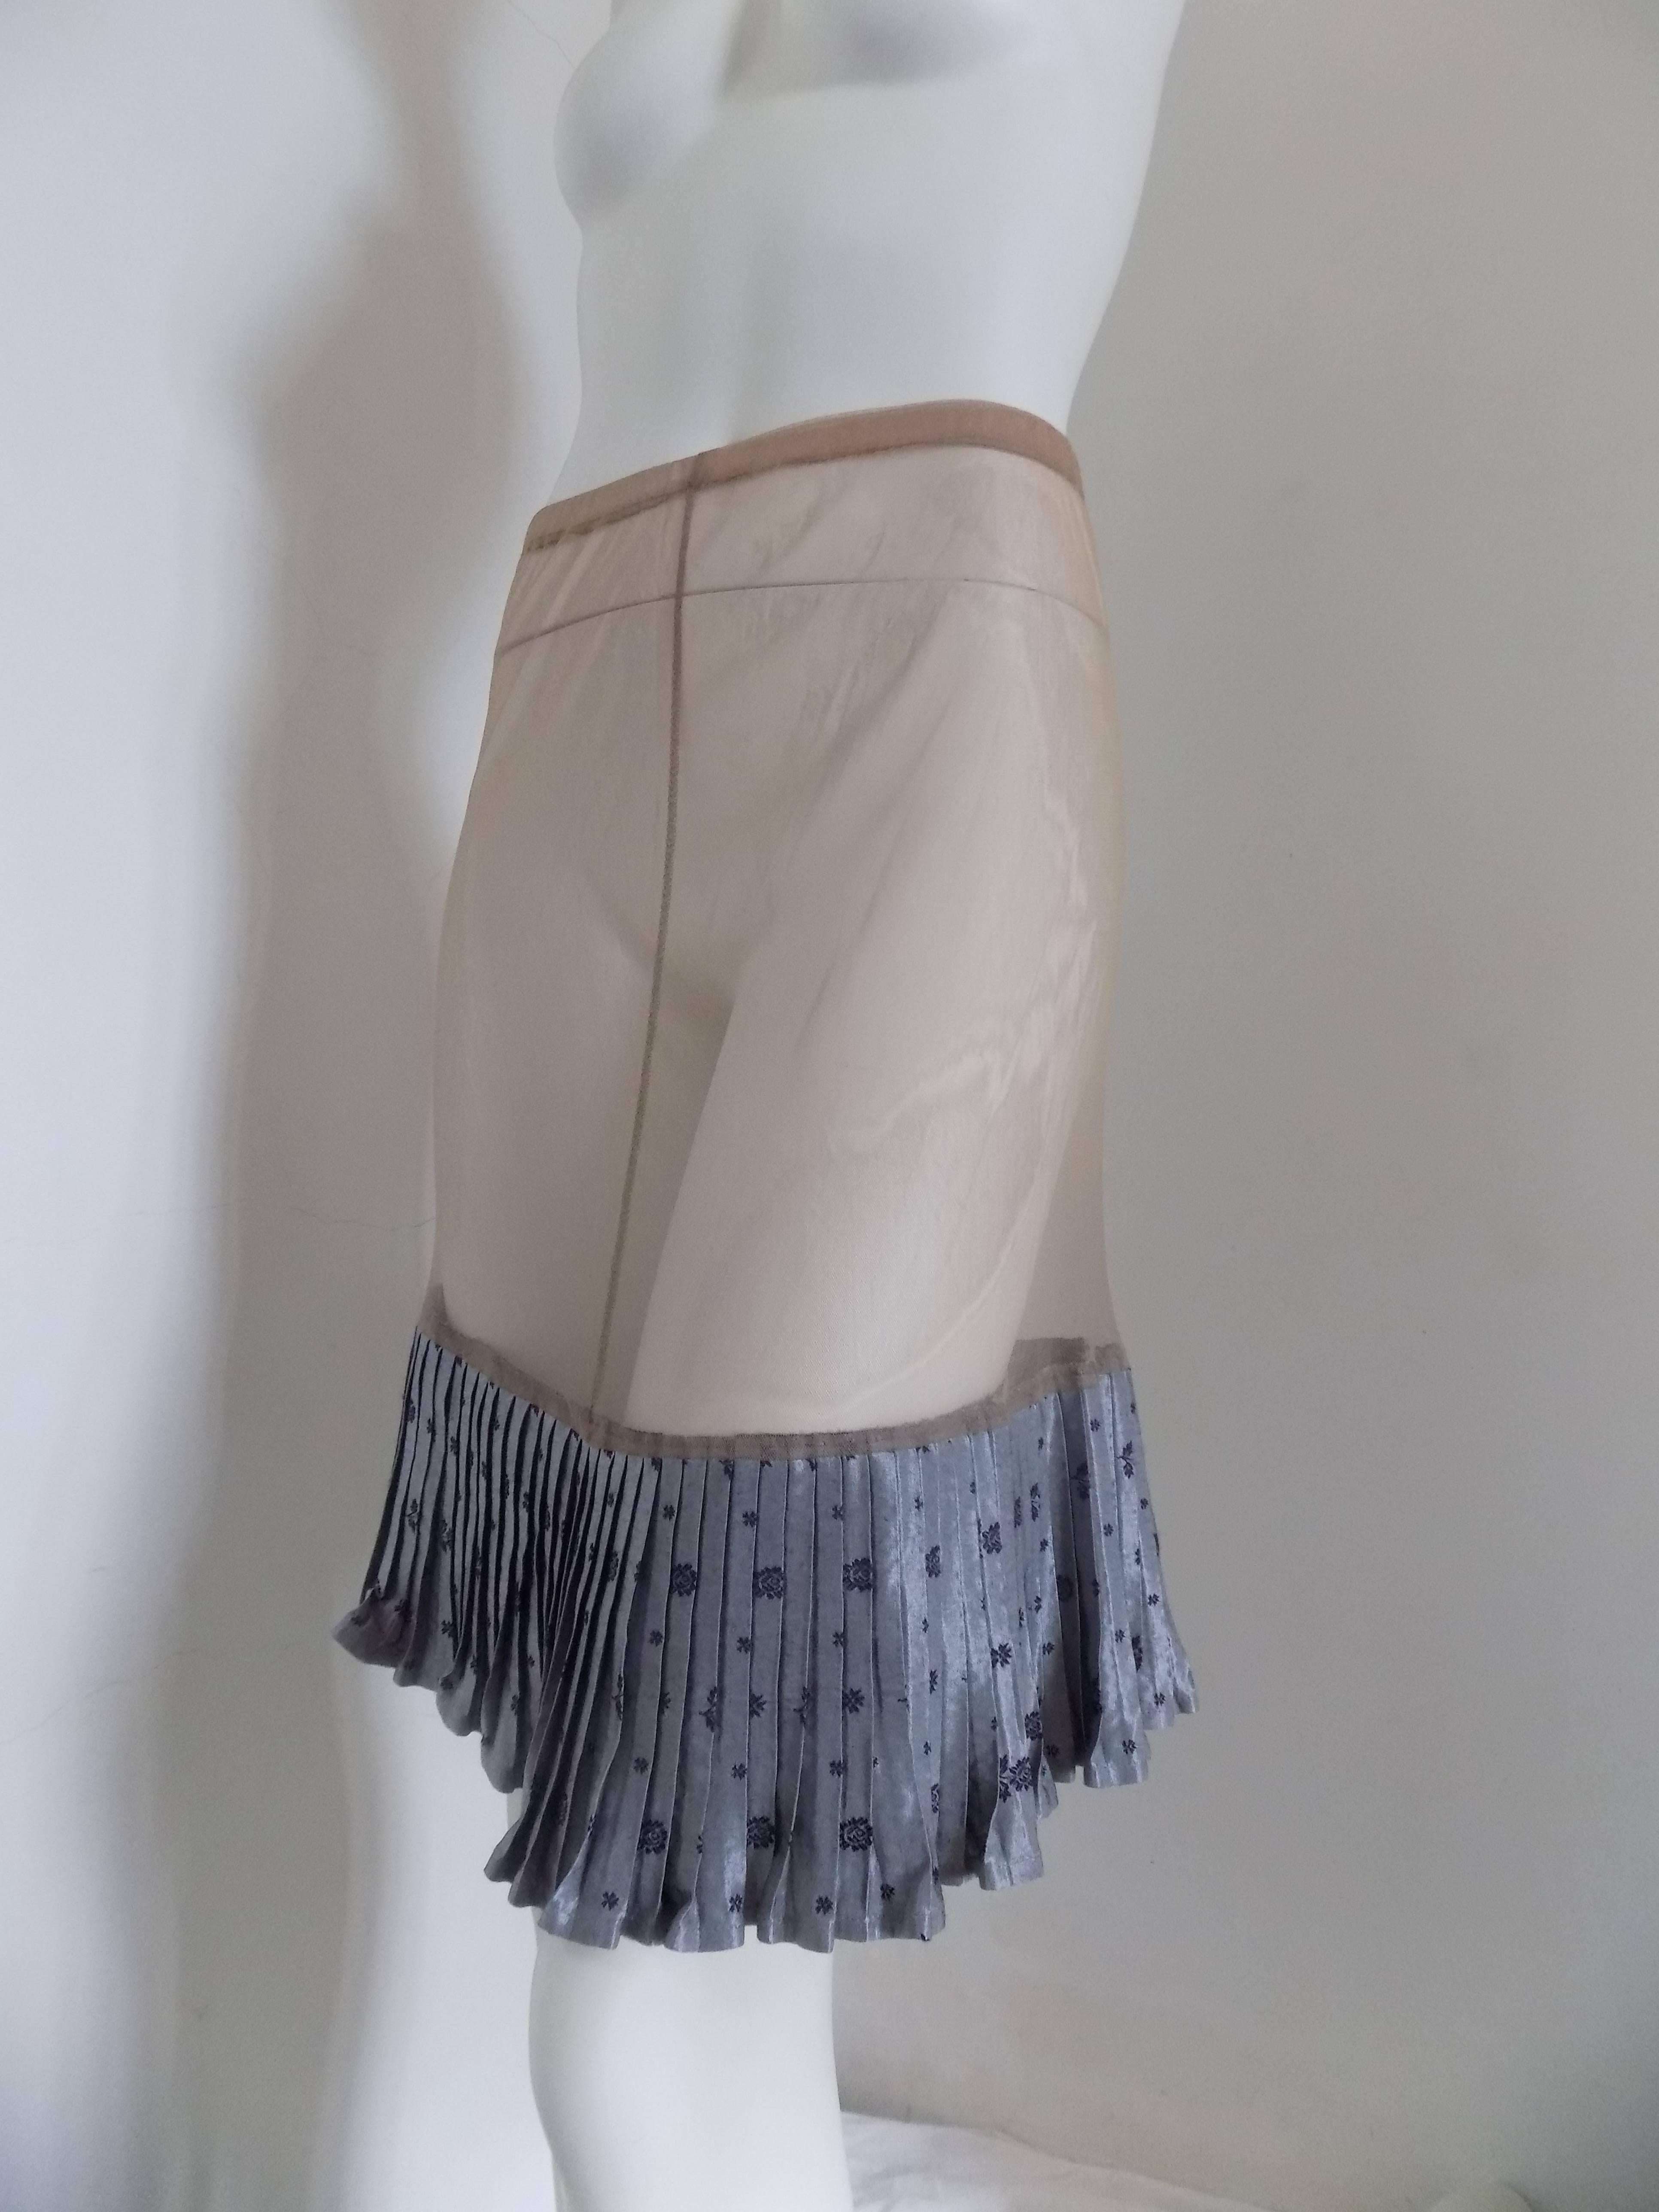 1980s See Through Skirt

Beije see through skirt 
Totally made in italy in italian size range M
